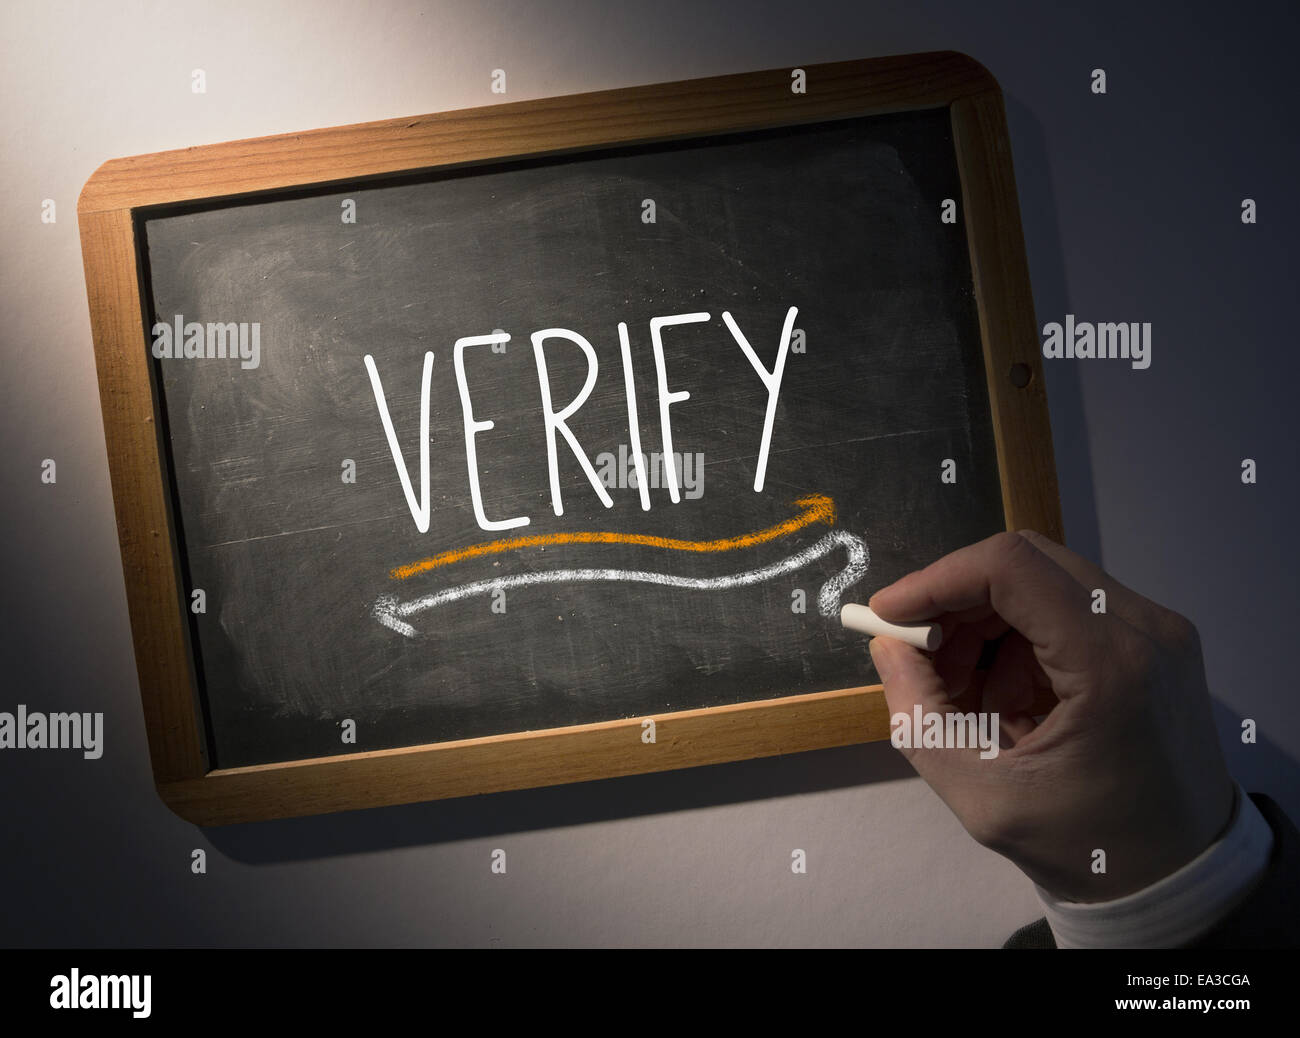 Hand writing Verify on chalkboard Stock Photo